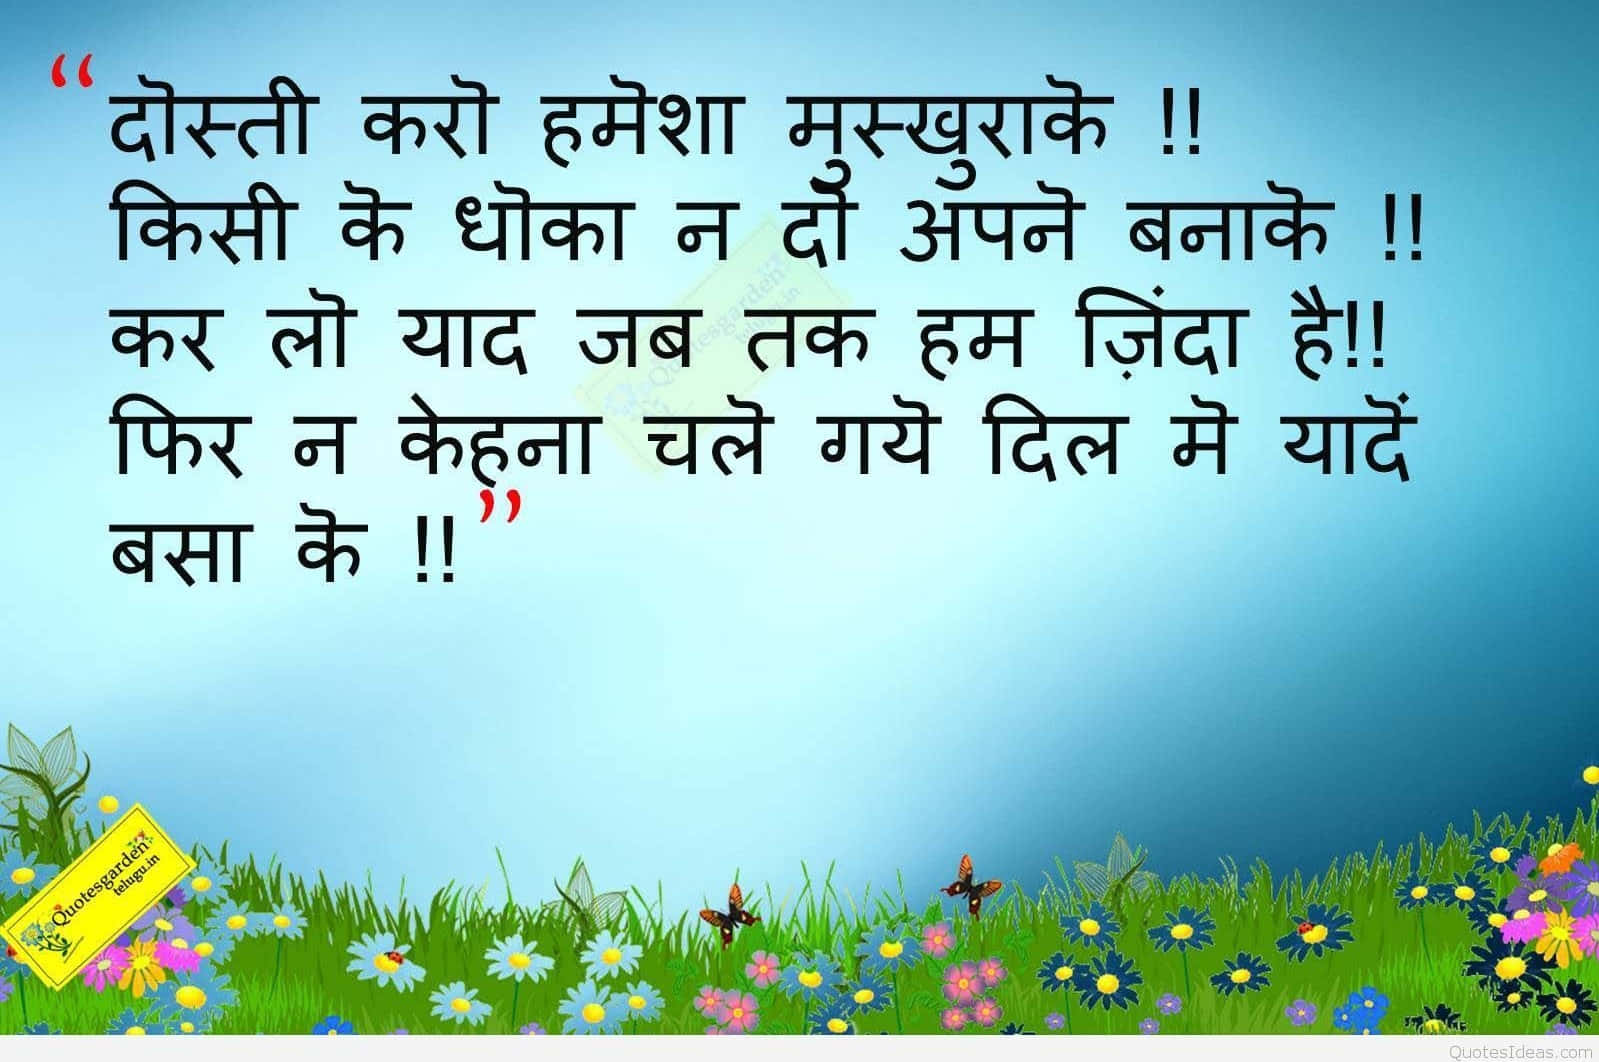 Experience the beauty of Hindi language